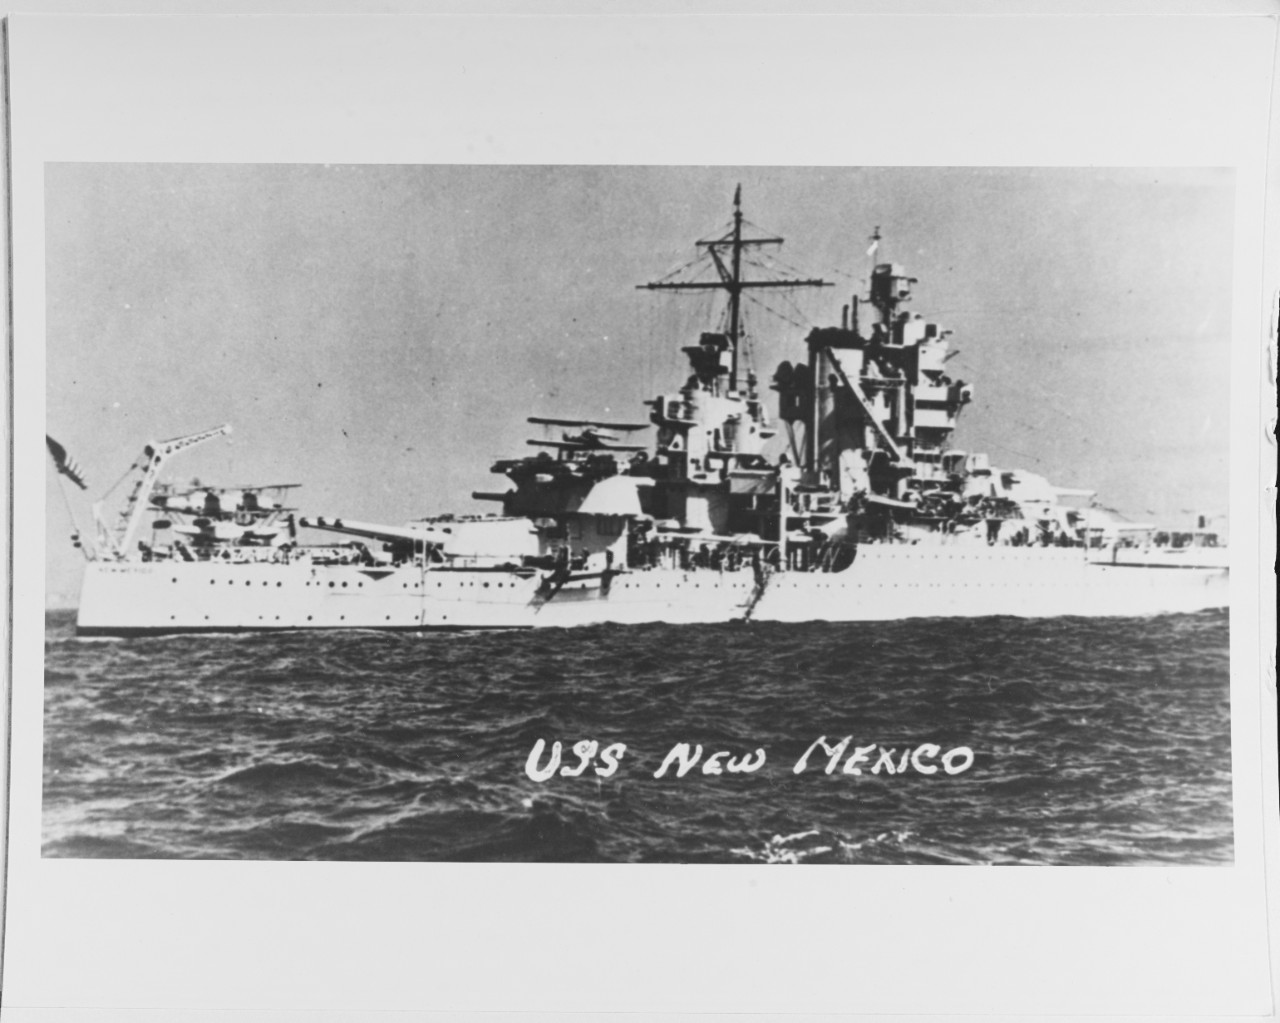 USS NEW MEXICO (BB-40)